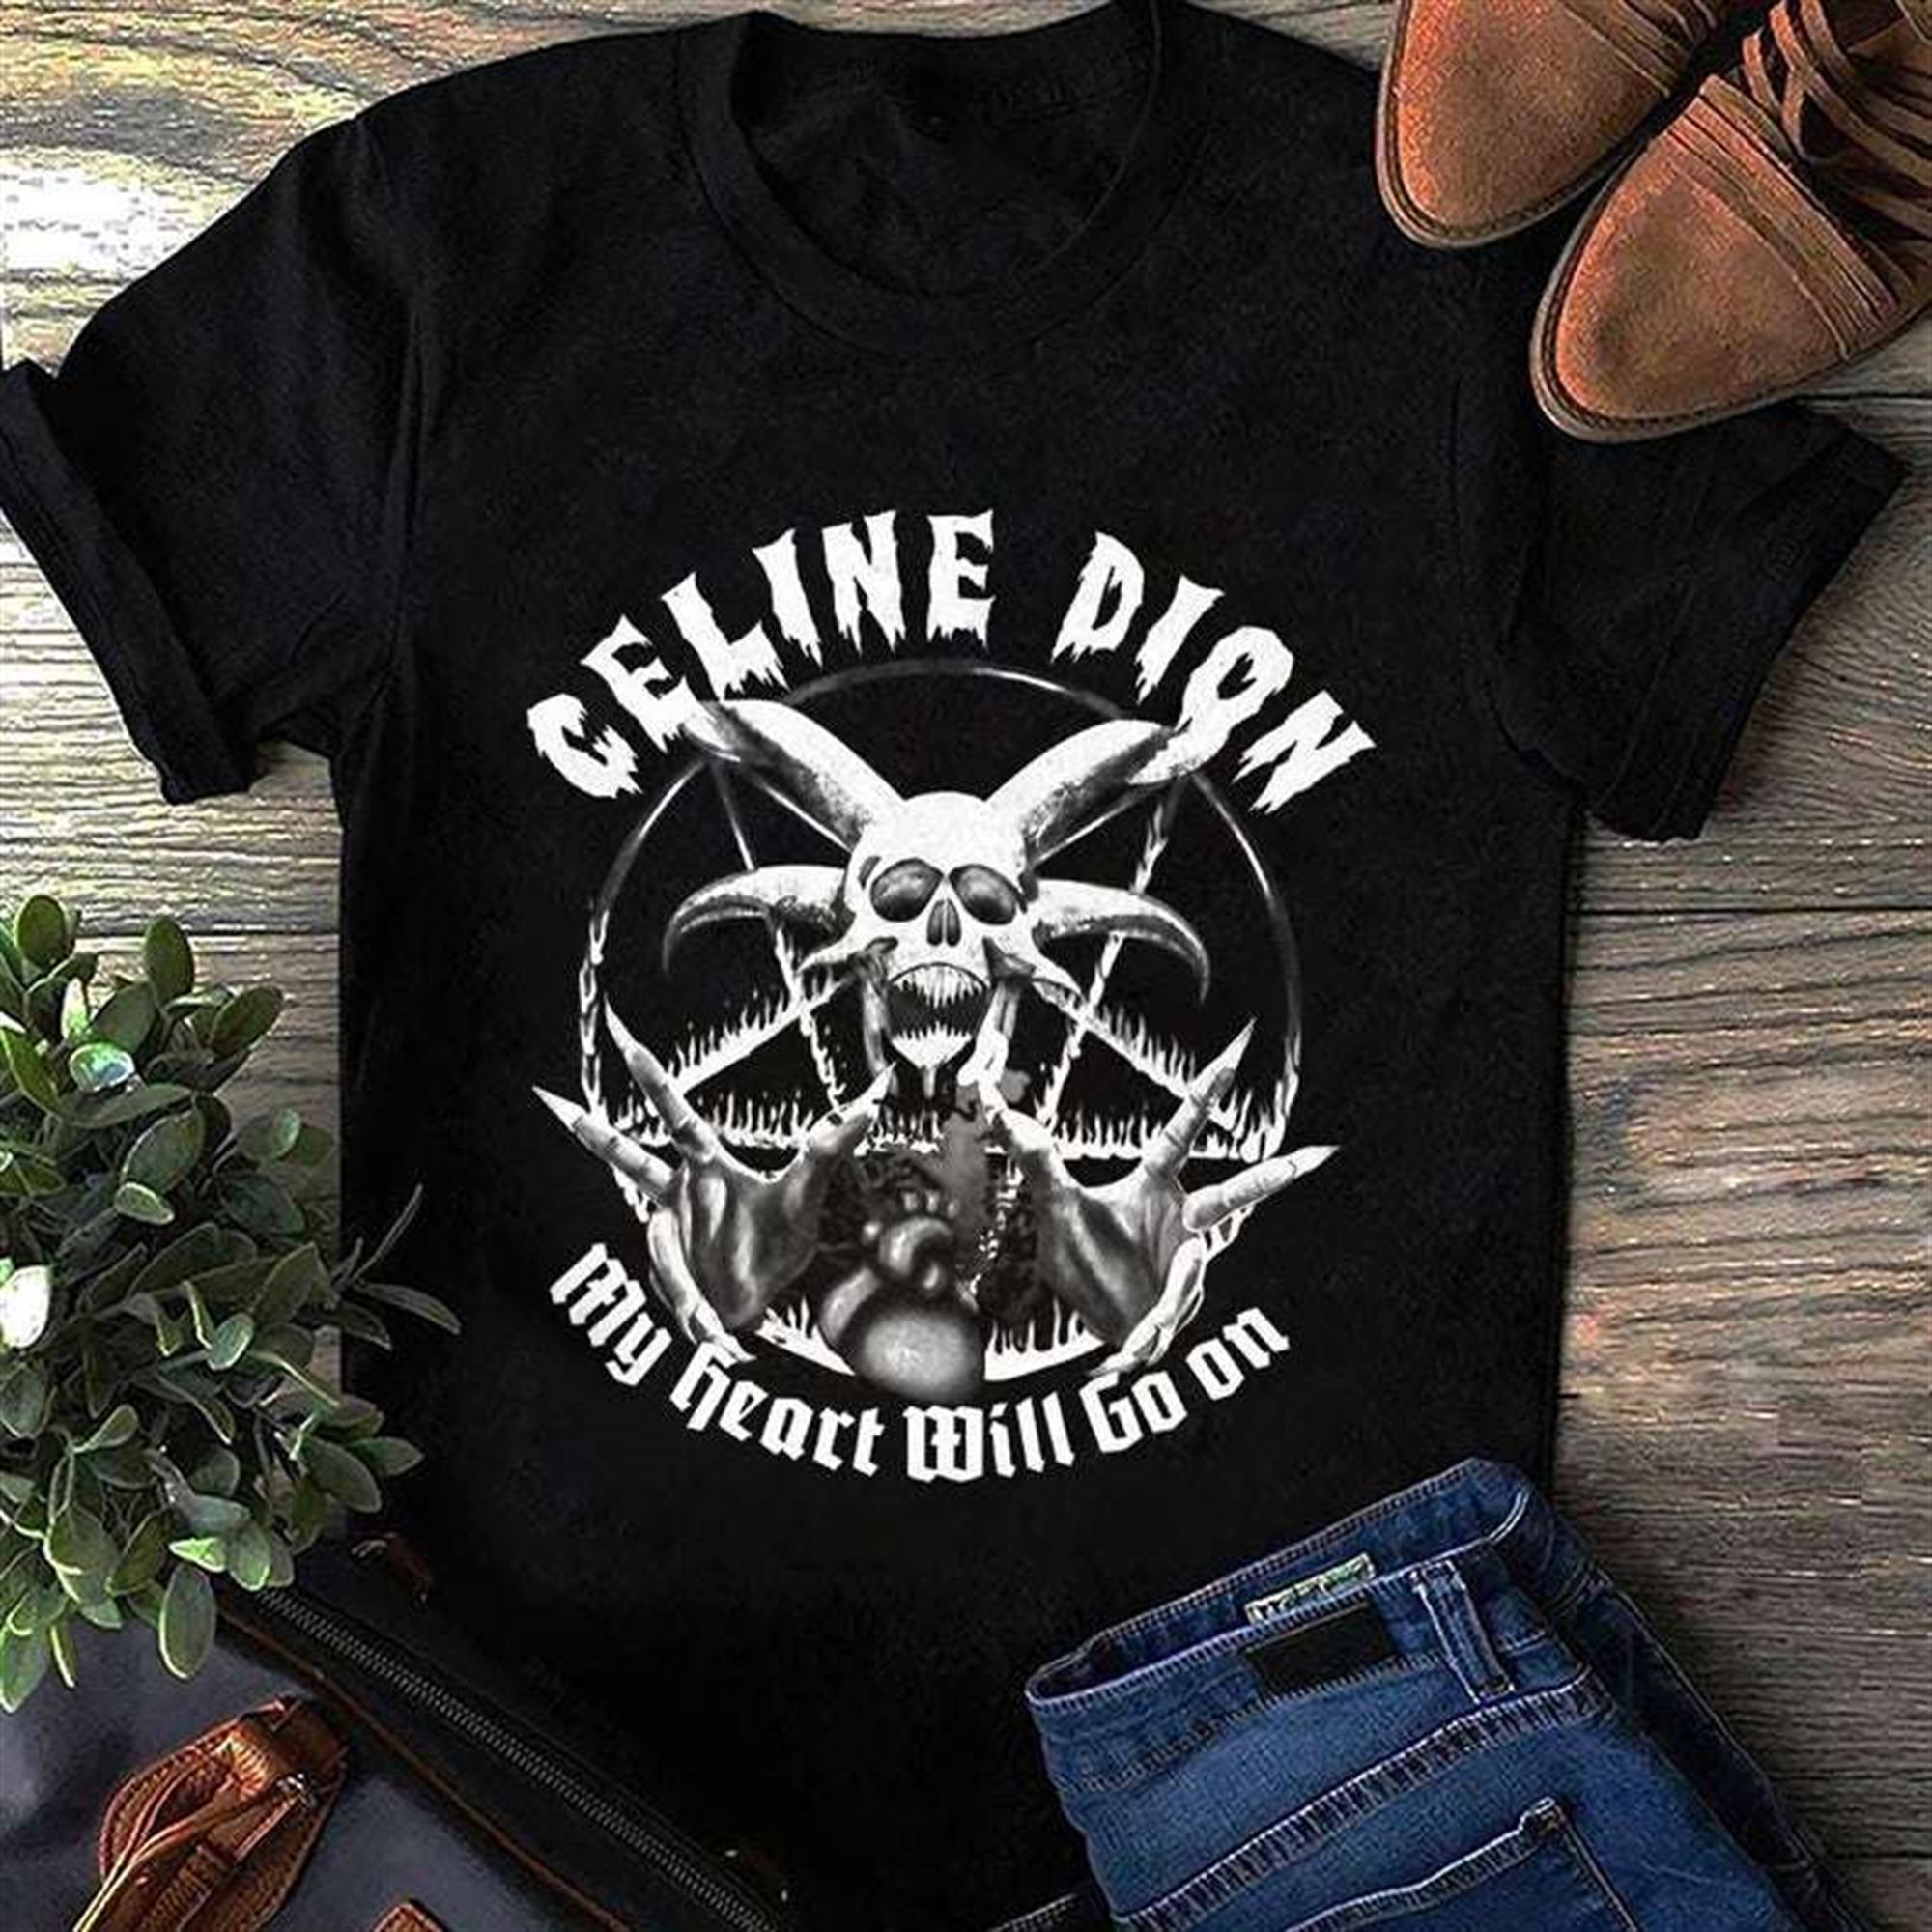 Celine Dion Vintage Death Metal T-shirt Full Size Up To 5xl